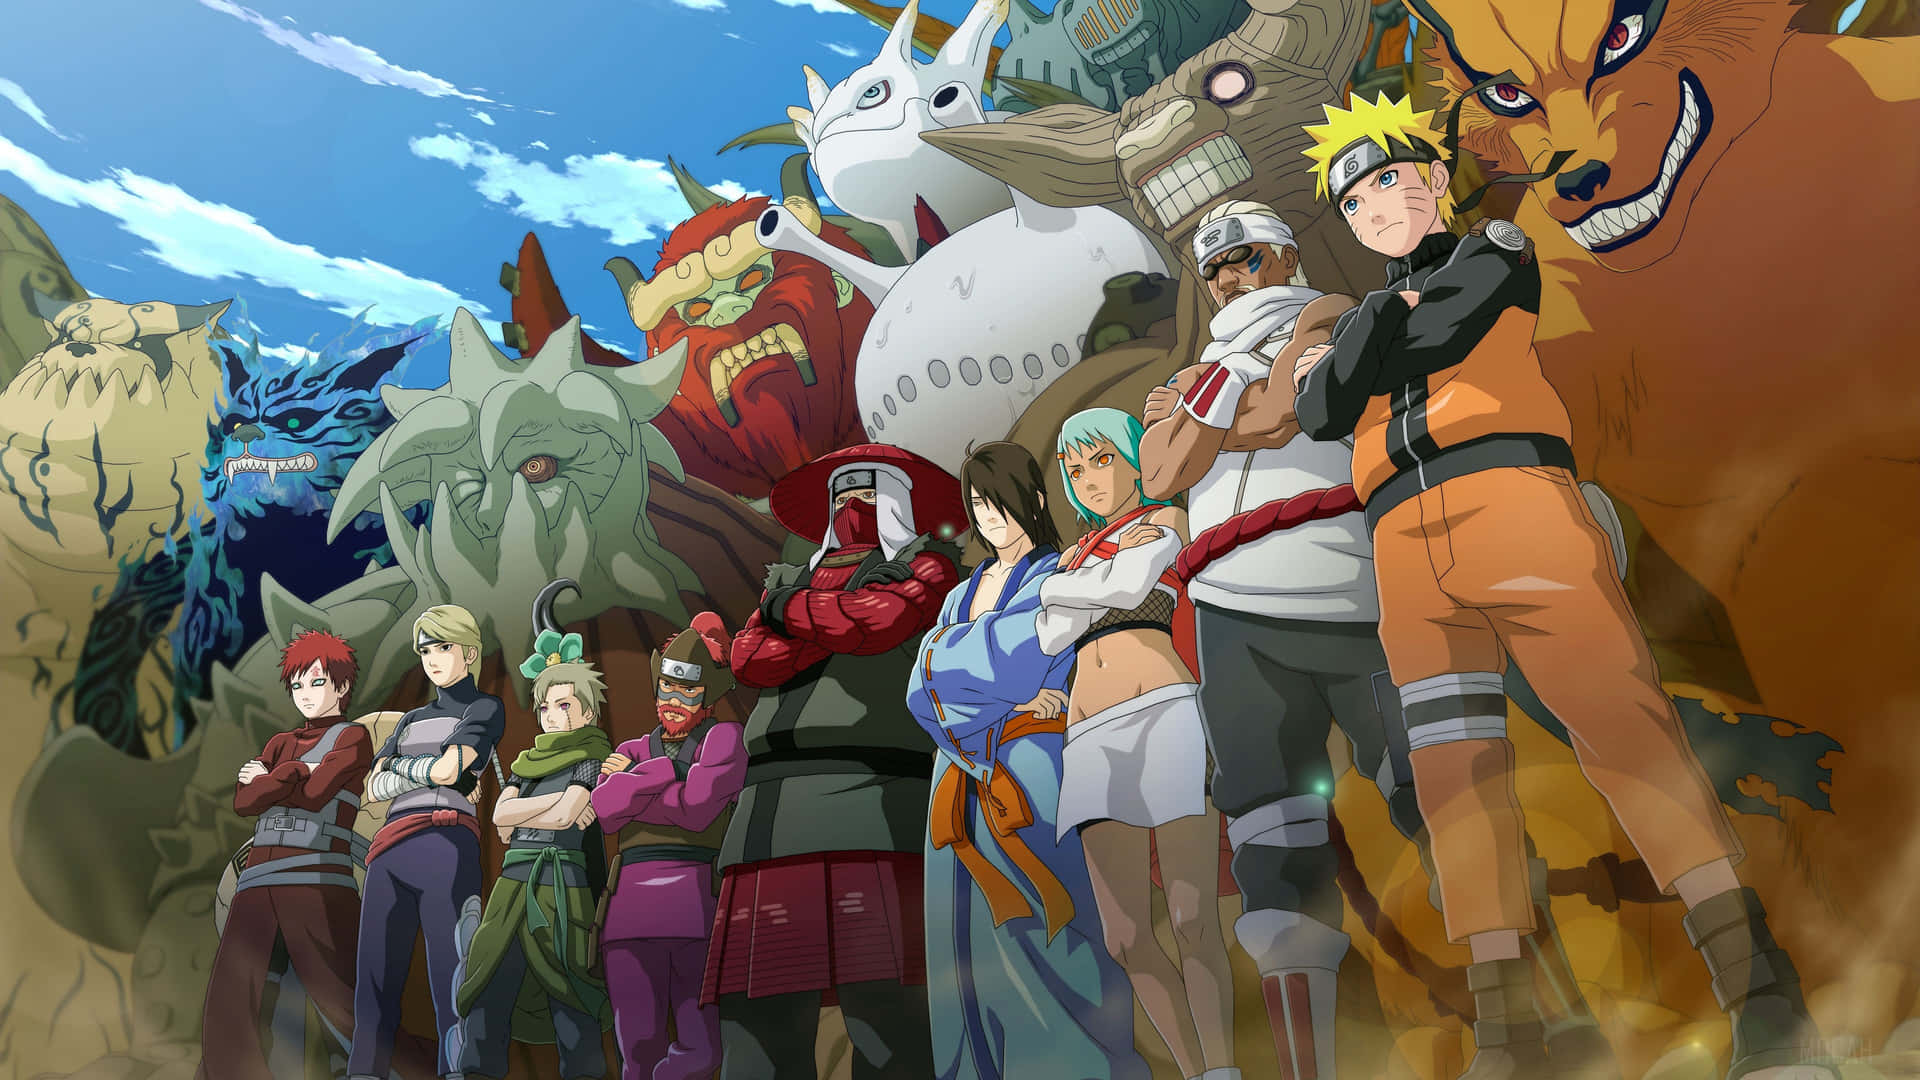 Gaara in his Full Naruto Shippuden Glory Wallpaper